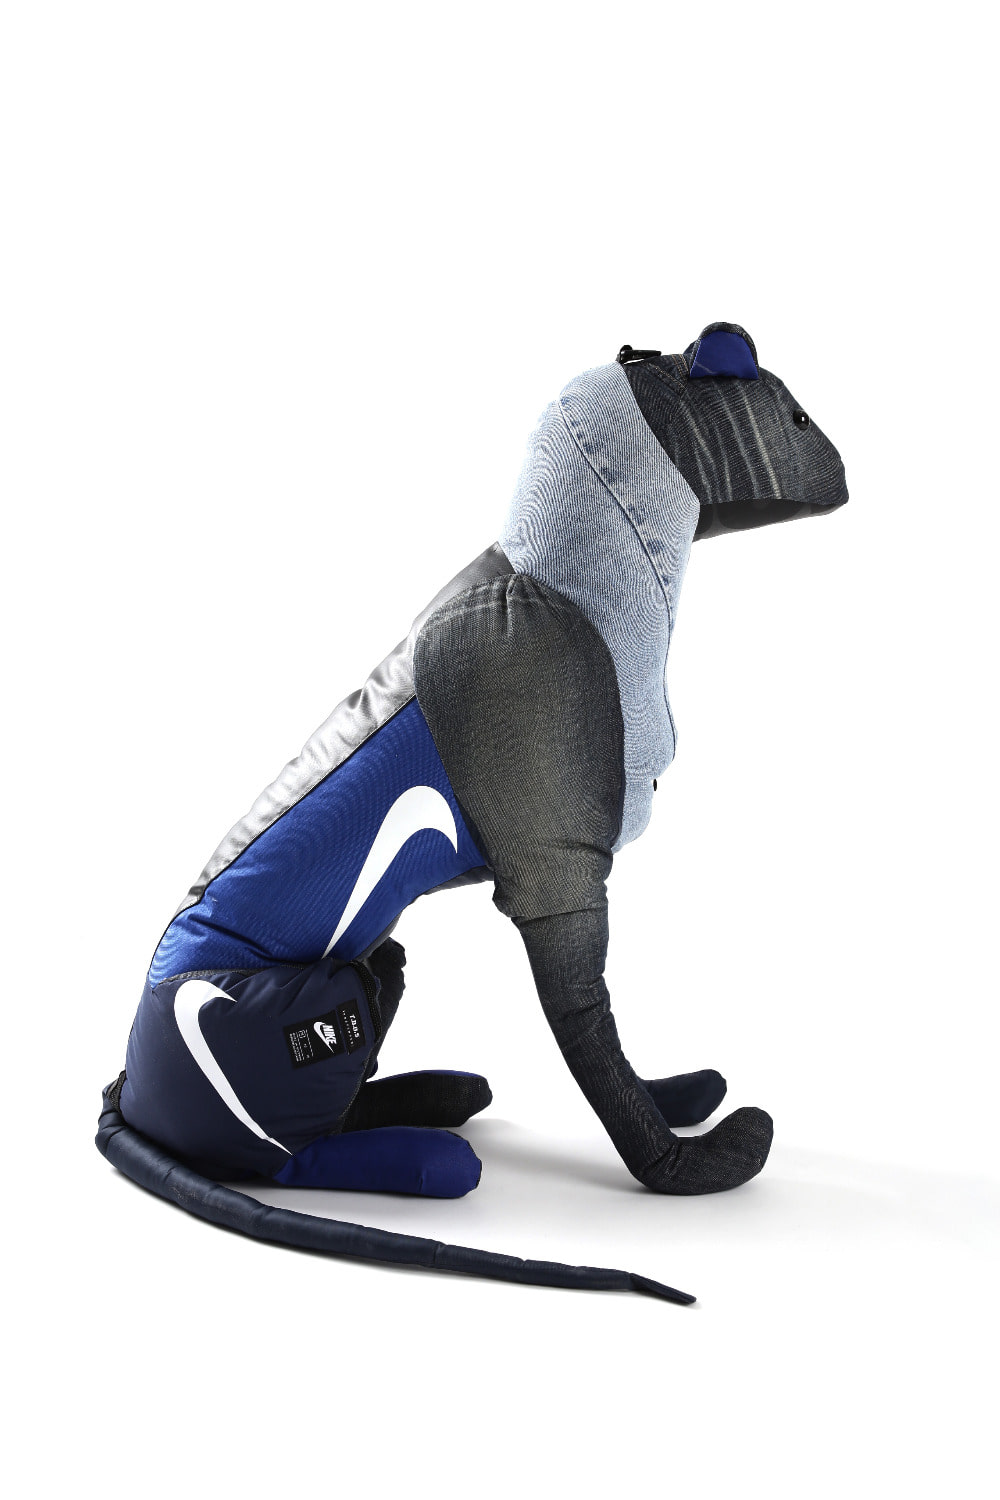 “Sprint“ series Cheetah 008 (2021) Remake work Nike acg vest &amp; levi’s denim